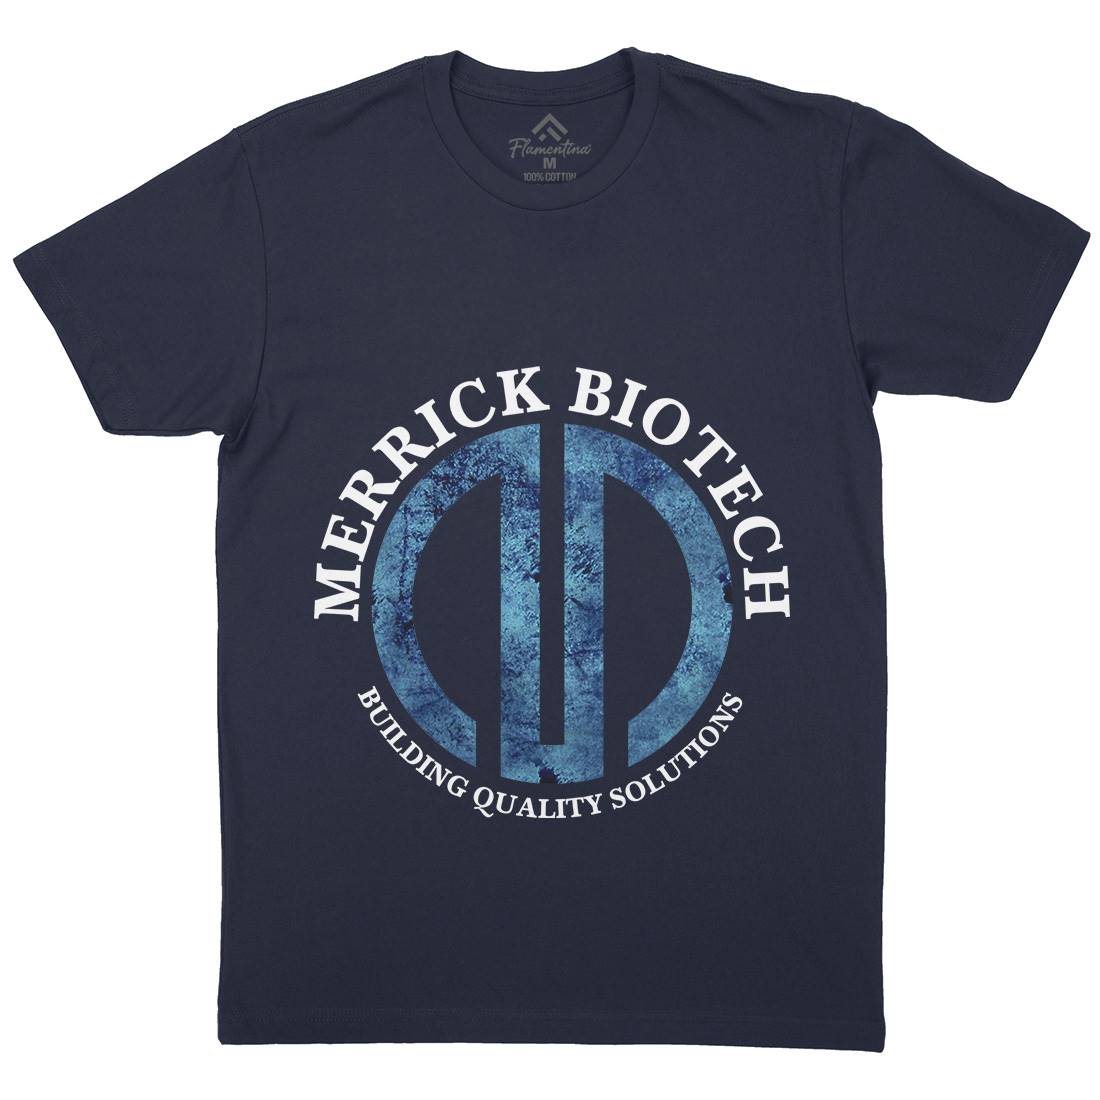 Merrick Biotech Mens Organic Crew Neck T-Shirt Space D393